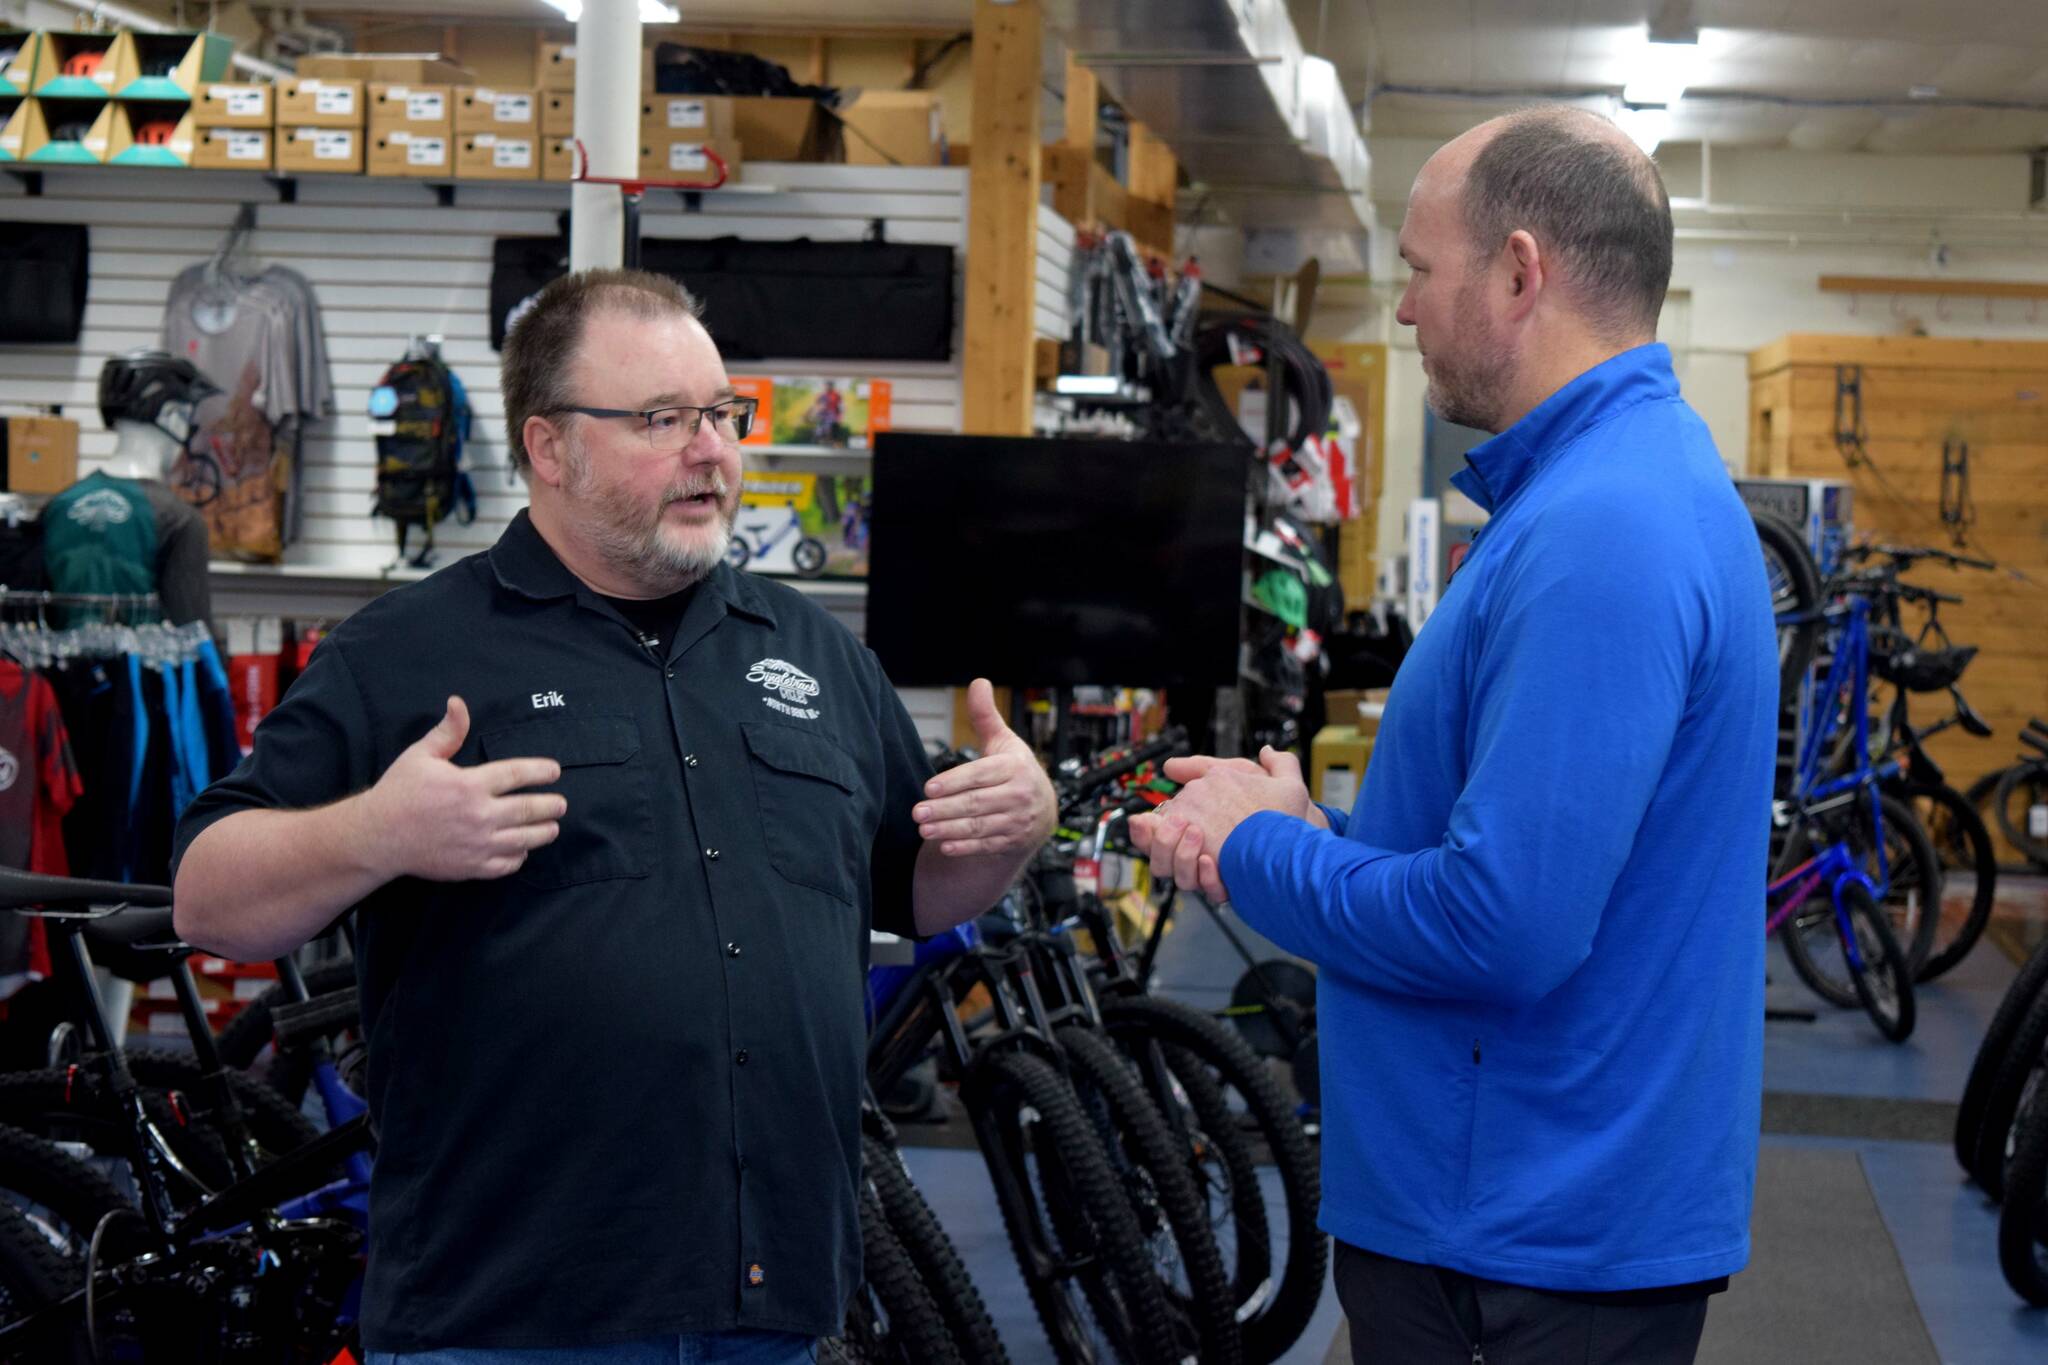 Brian Davis (R) speaks to Erik Alston, owner of Singletrack Cycles.